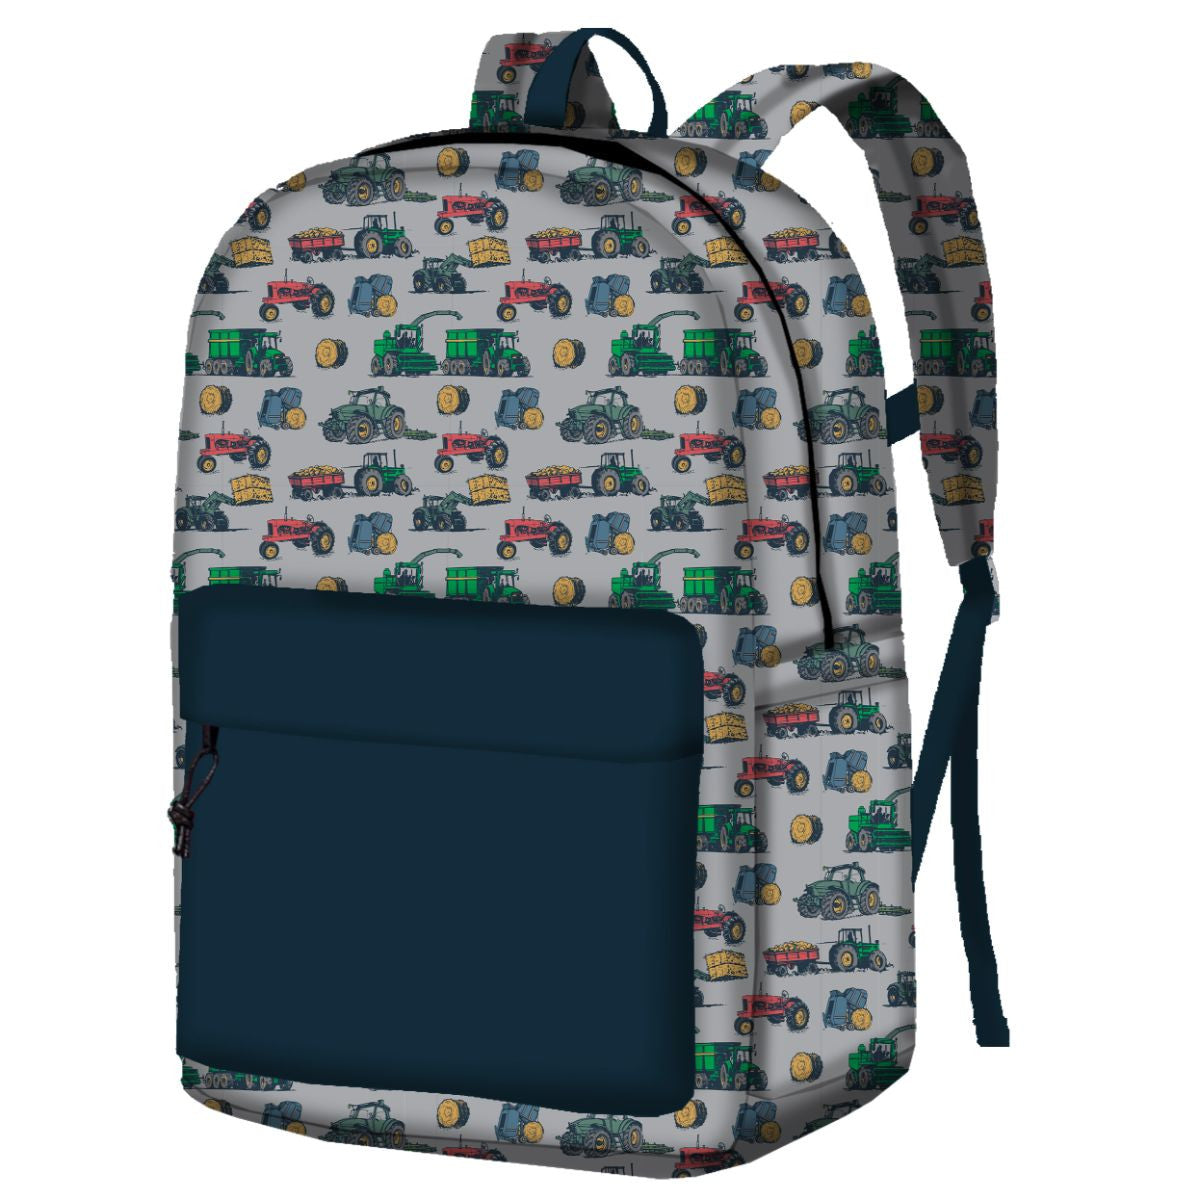 Jane Marie Cheetah Print Backpack Personalized School Bag 